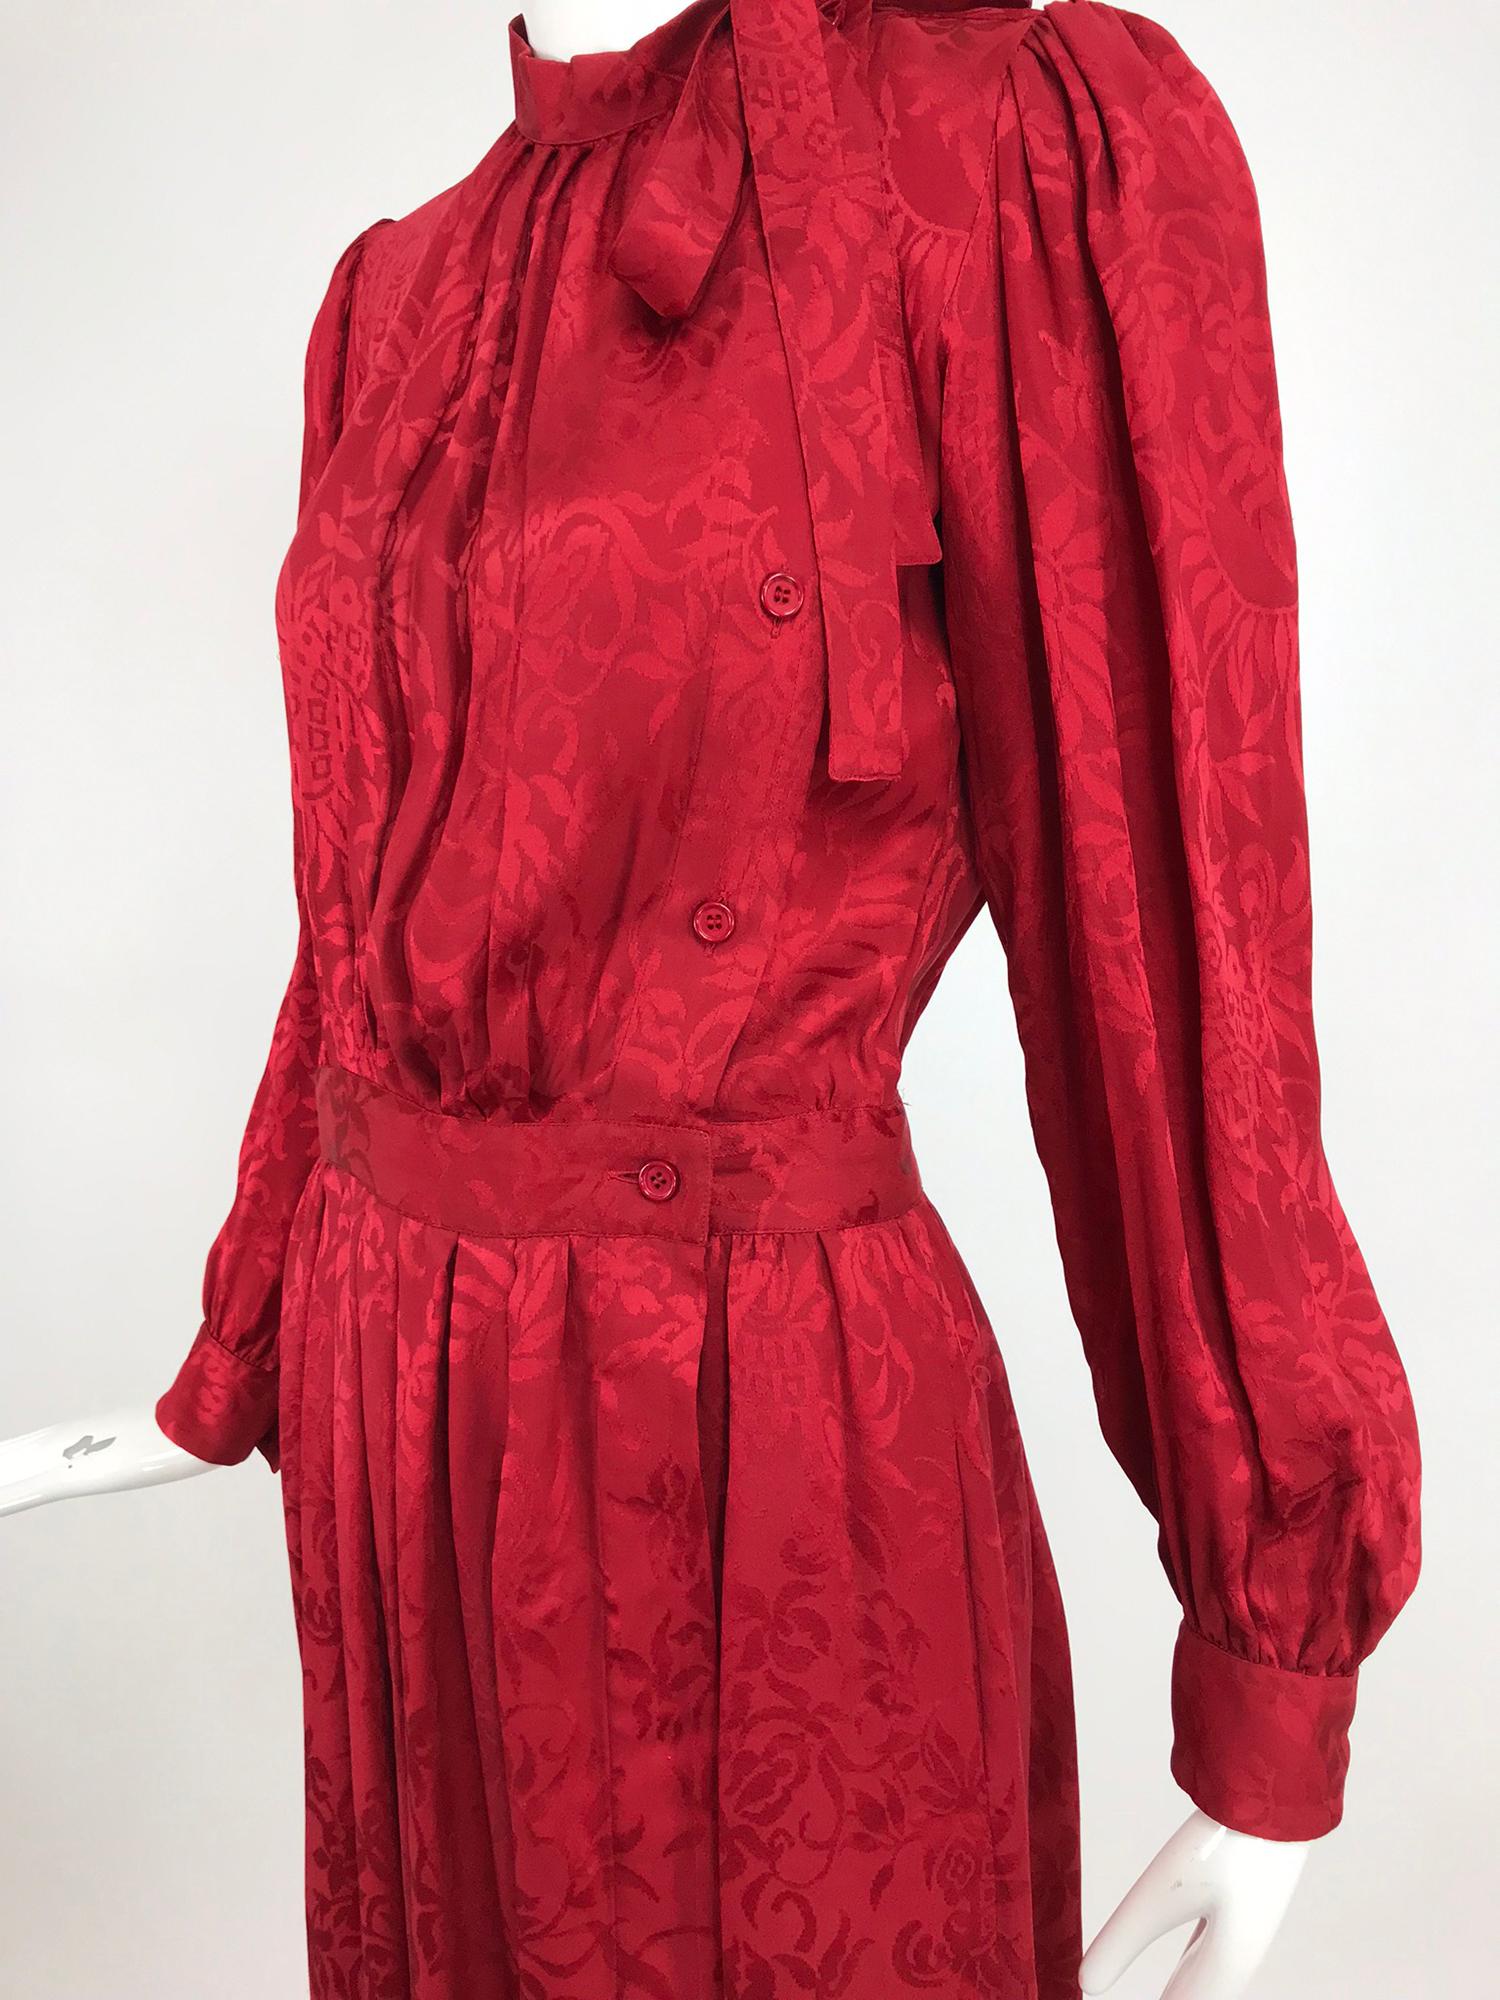 Yves Saint Laurent Red Silk Jacquard Bow Tie Dress 1970s 11